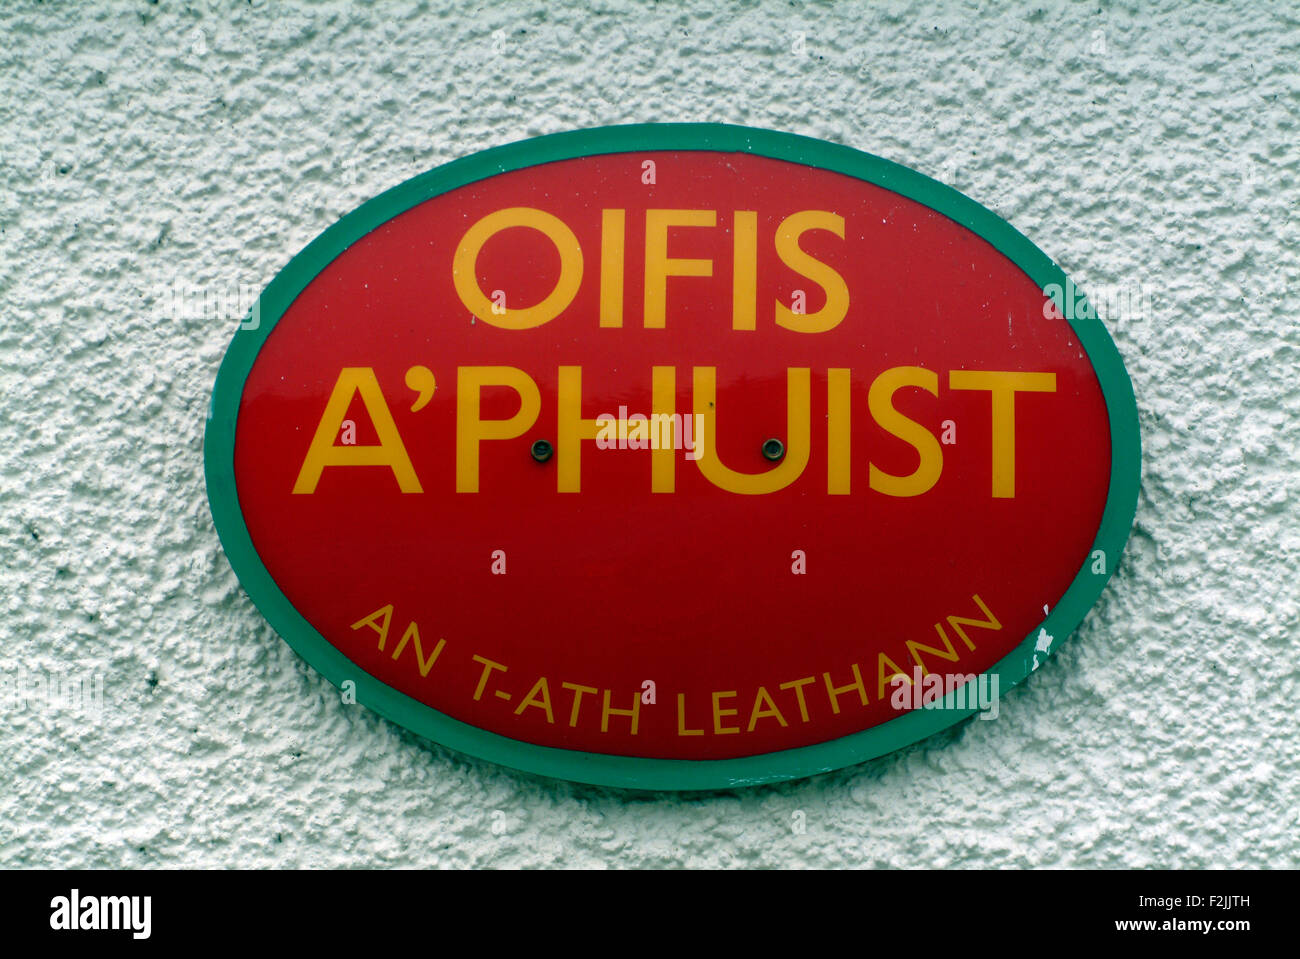 Scottish Gaelic Post Office sign Oifis a Phuist Scotland UK Europe Stock Photo